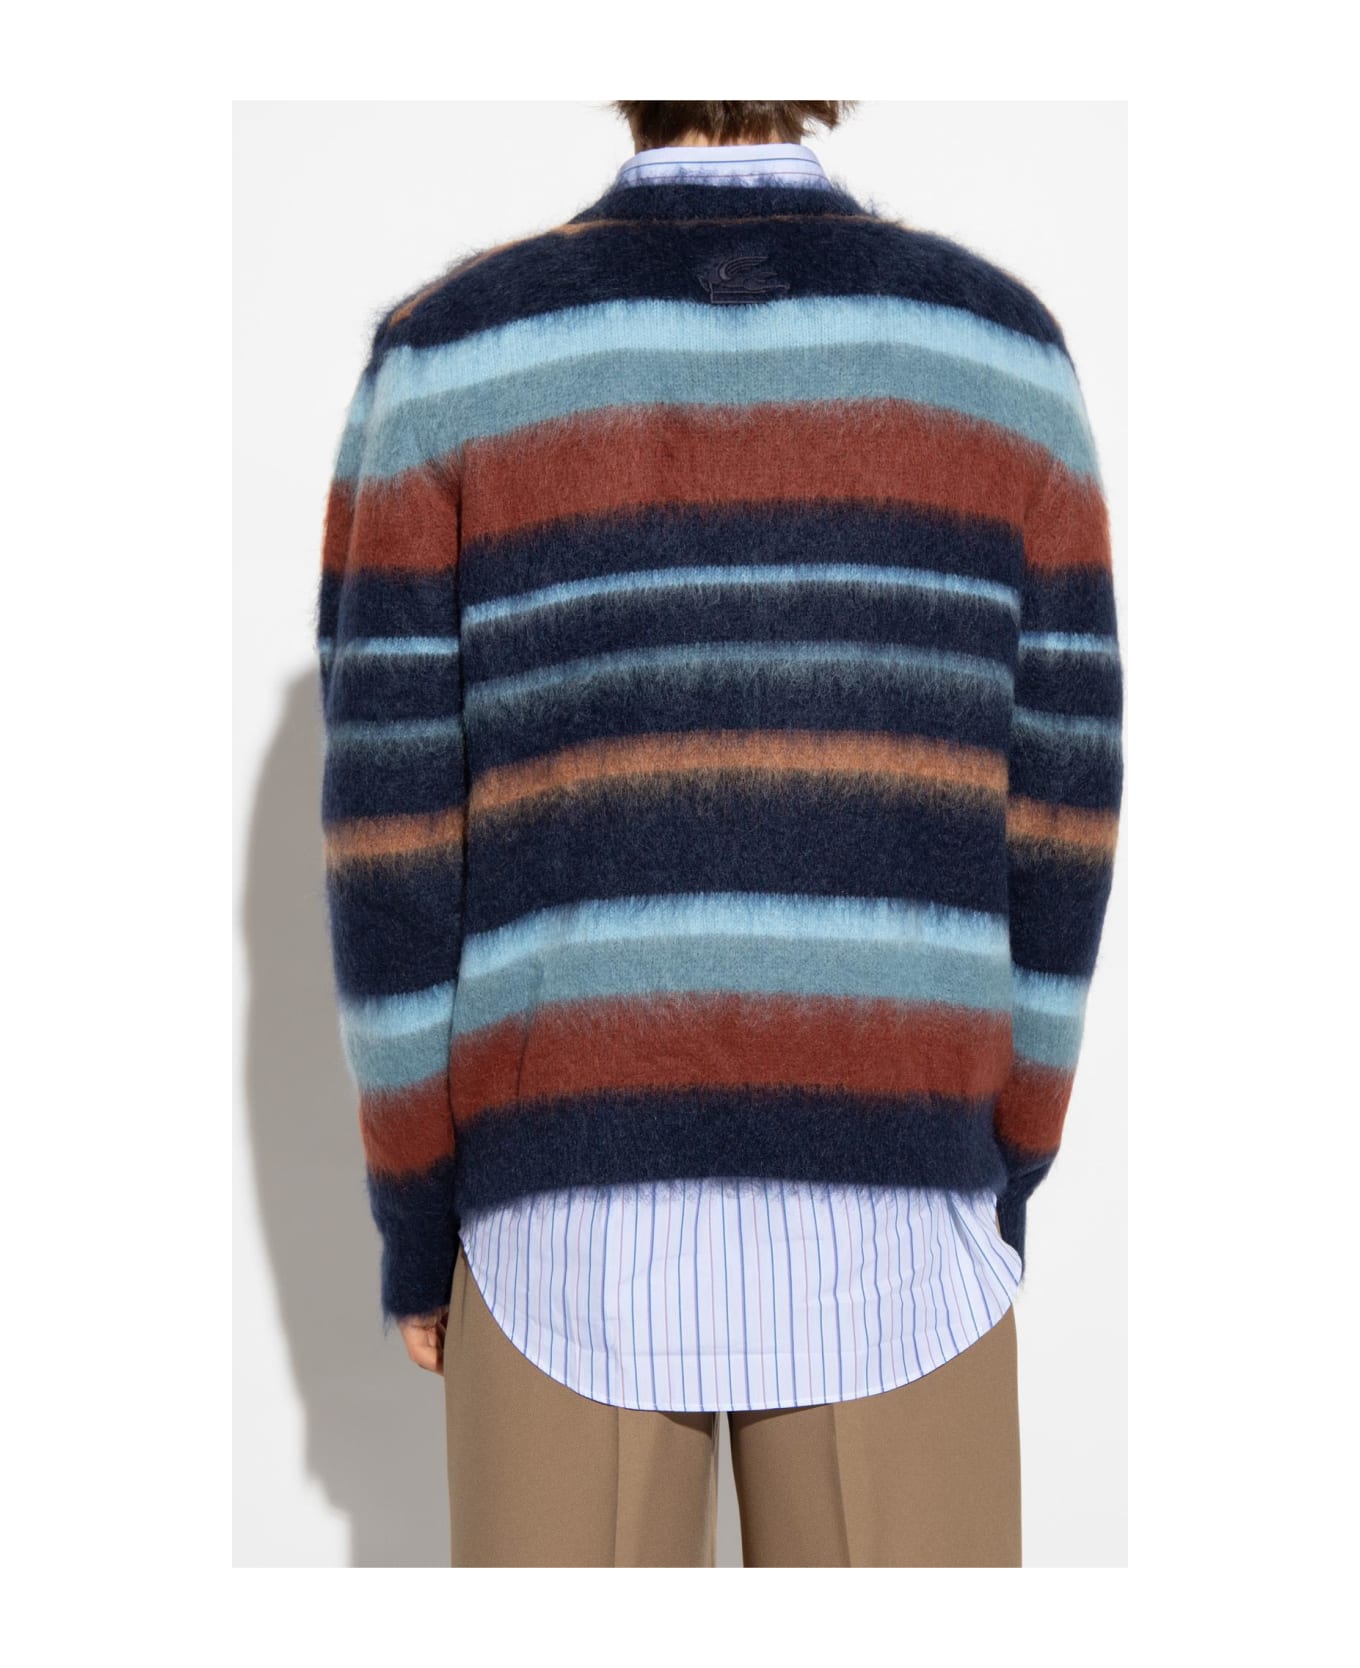 Etro Striped Sweater - Blue